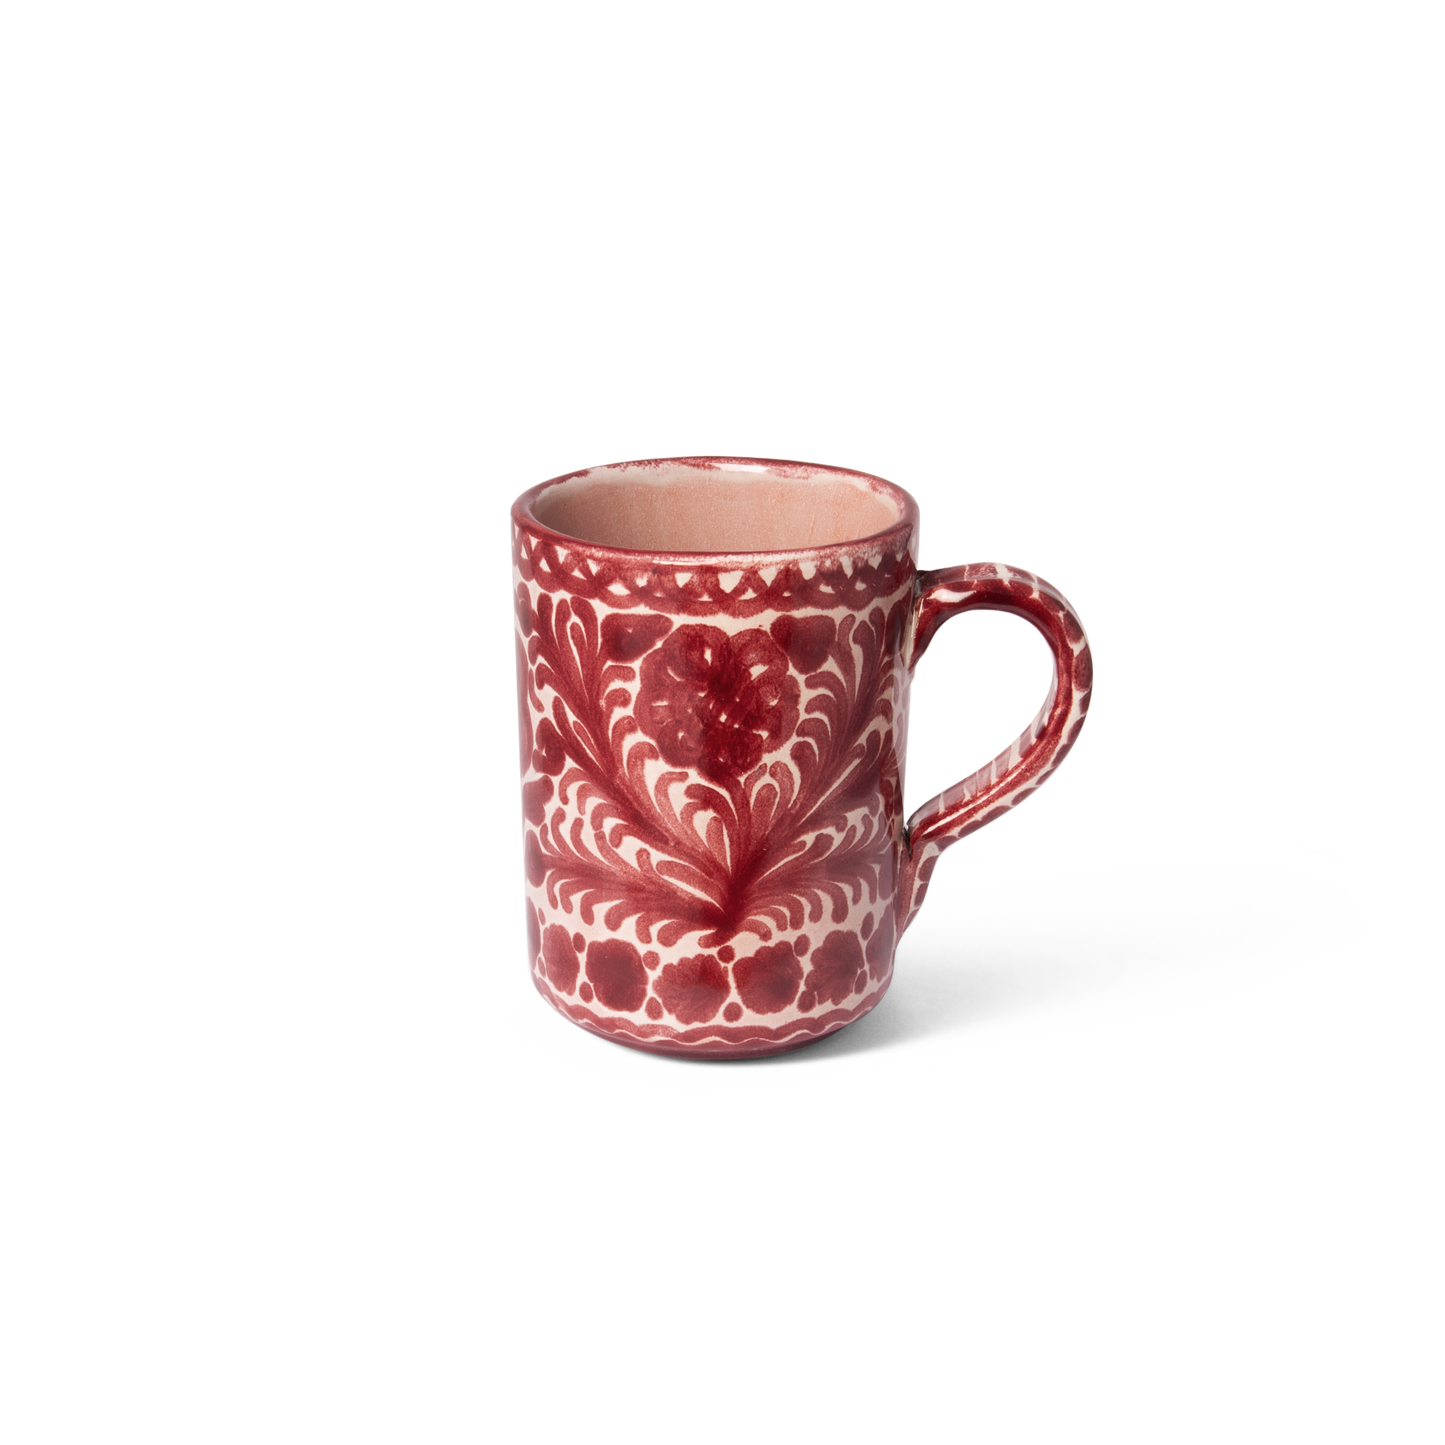 Solera Coffee Mug - Set of 2